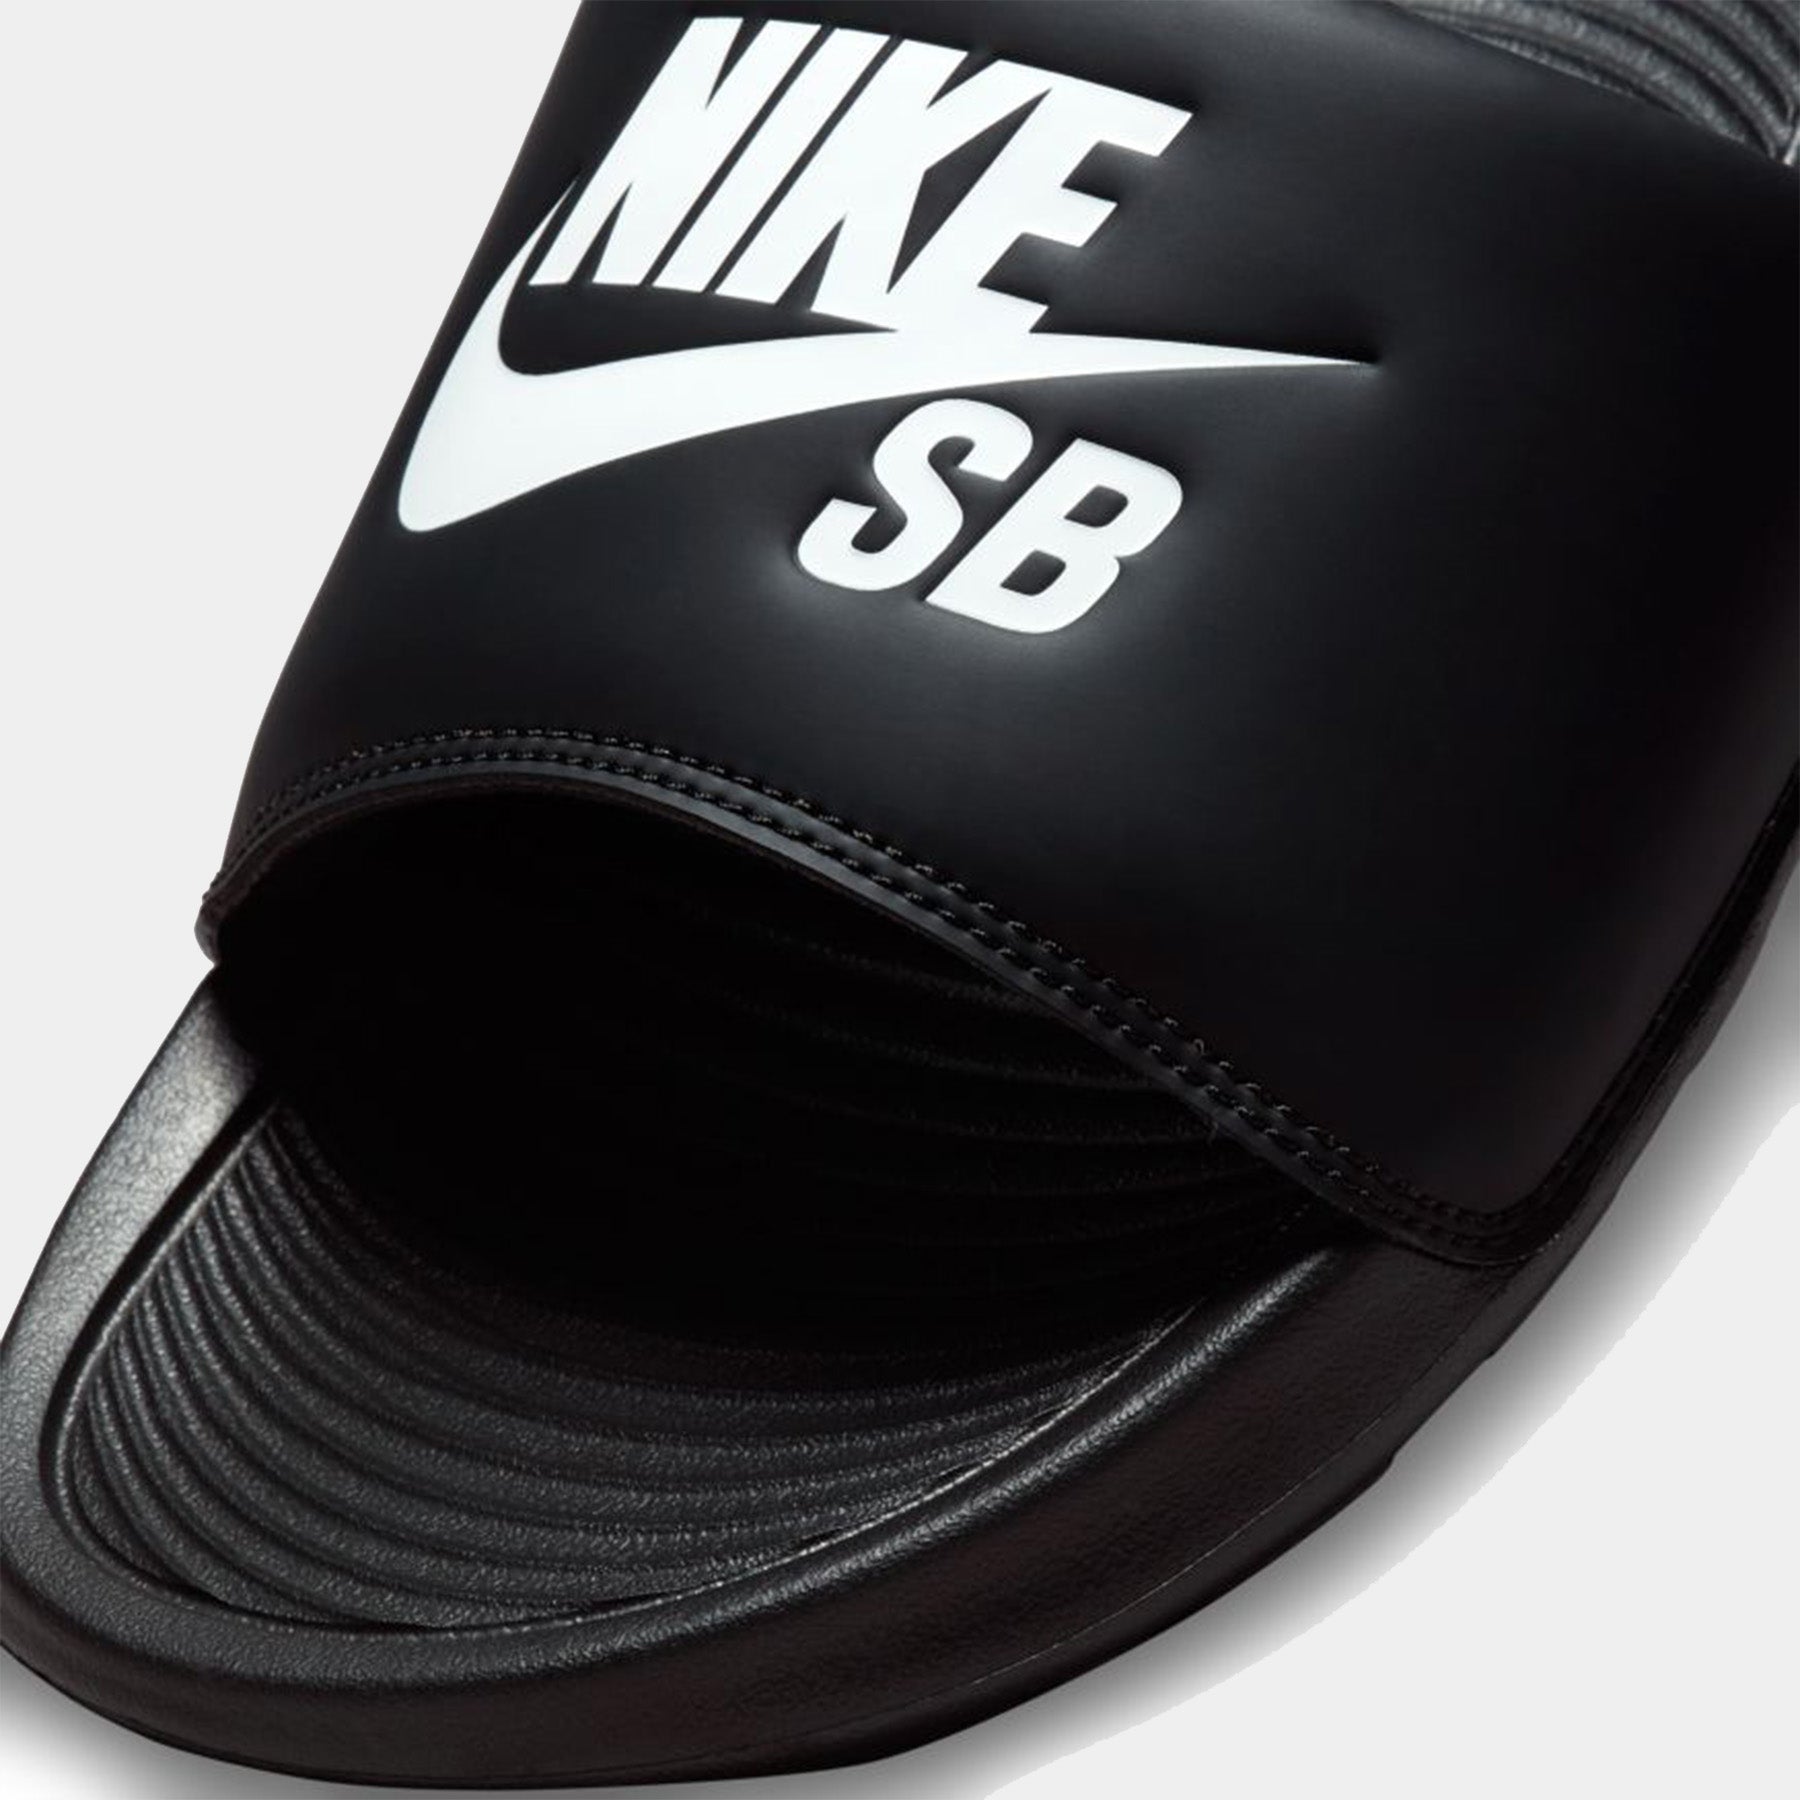 Nike SB Slides - Victori One